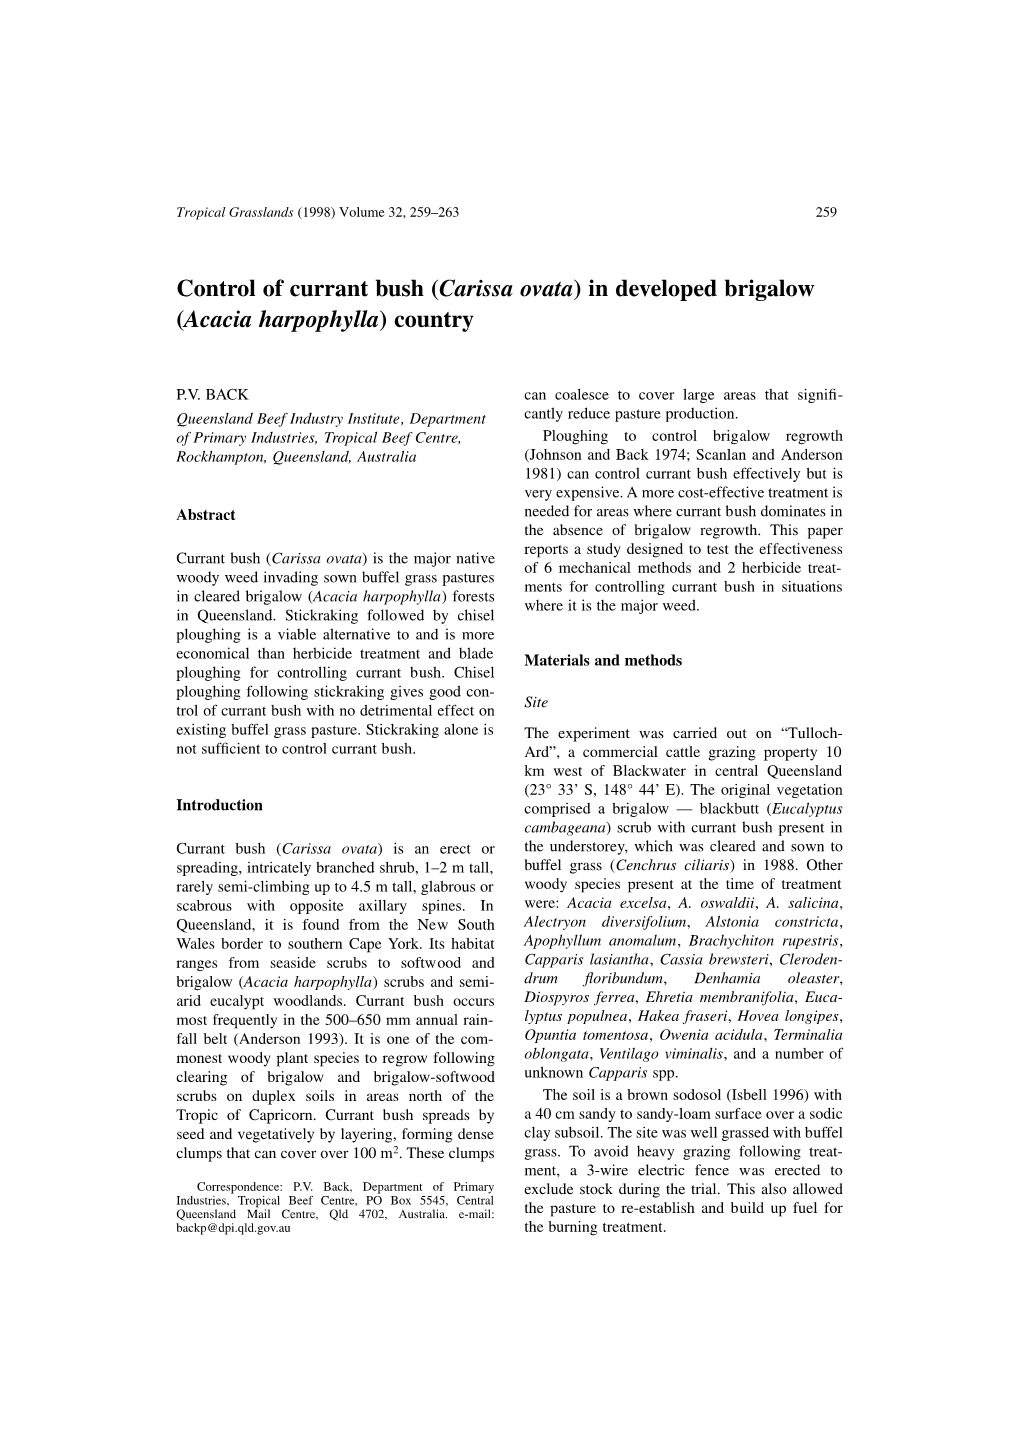 Control of Currant Bush (Carissa Ovata) in Developed Brigalow (Acacia Harpophylla) Country